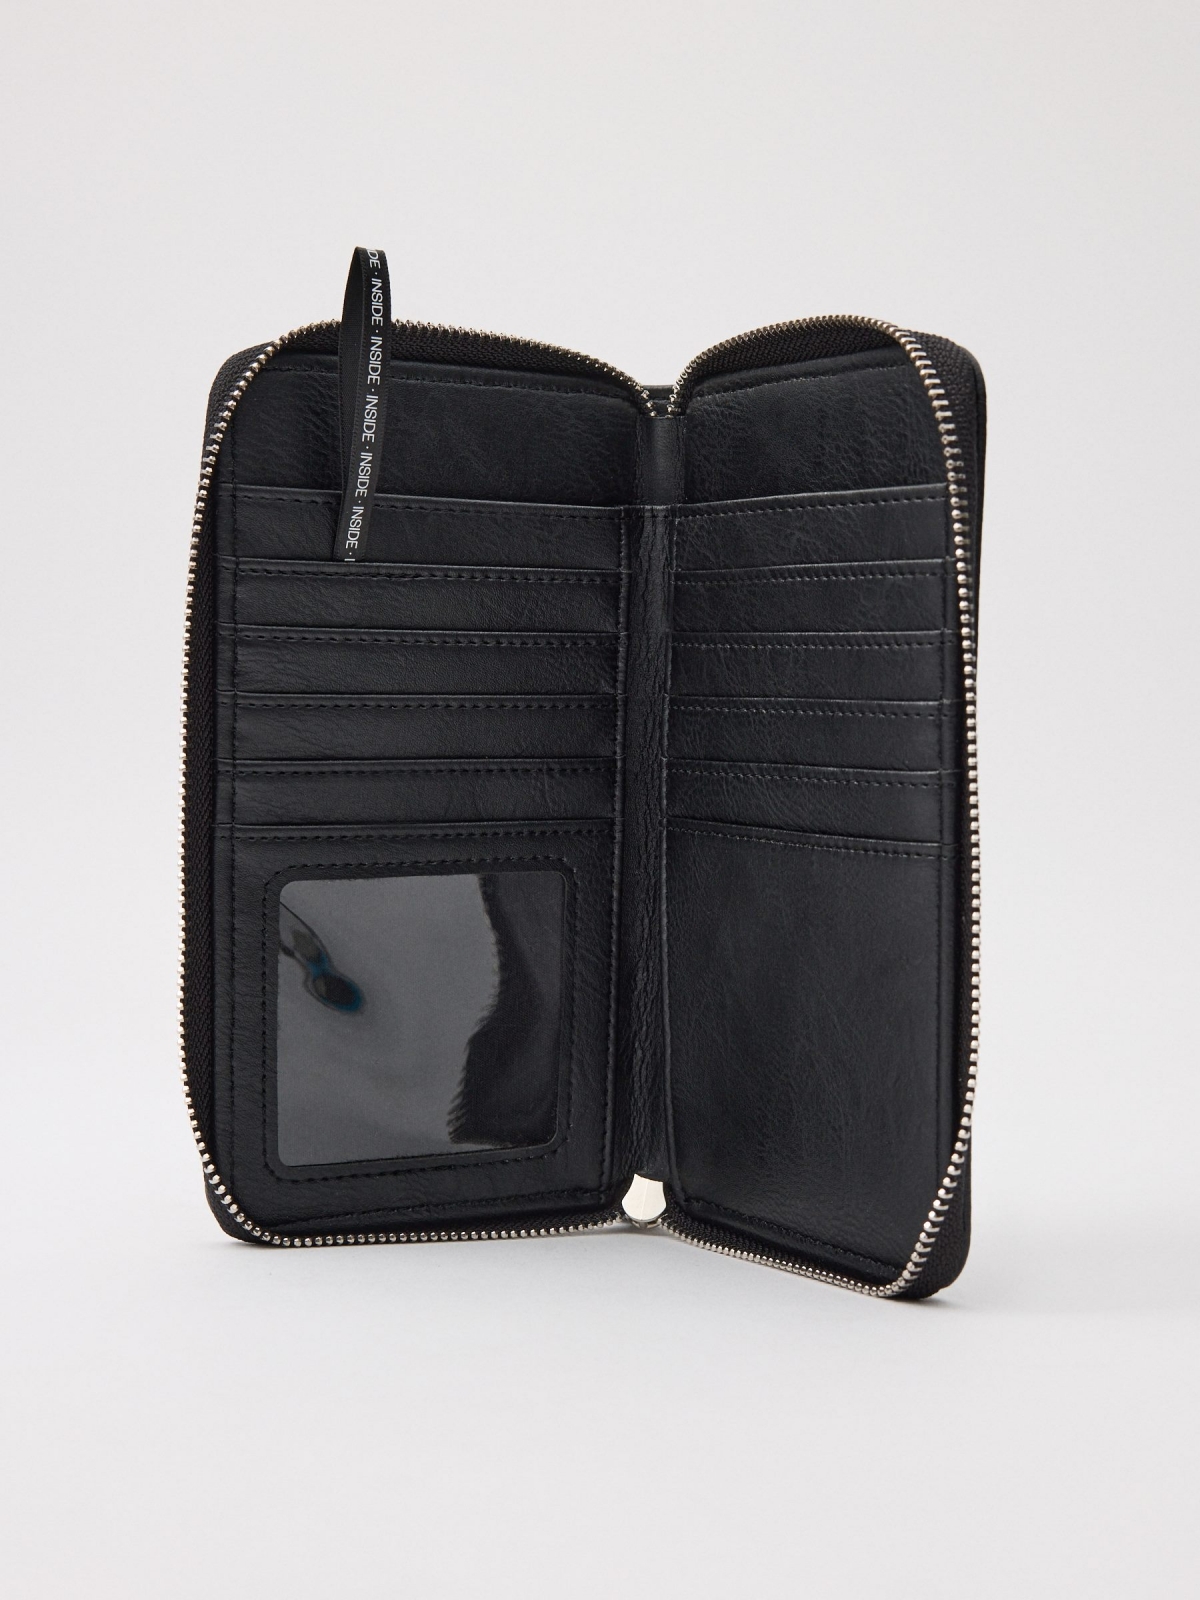 Women's large leatherette wallet black detail view